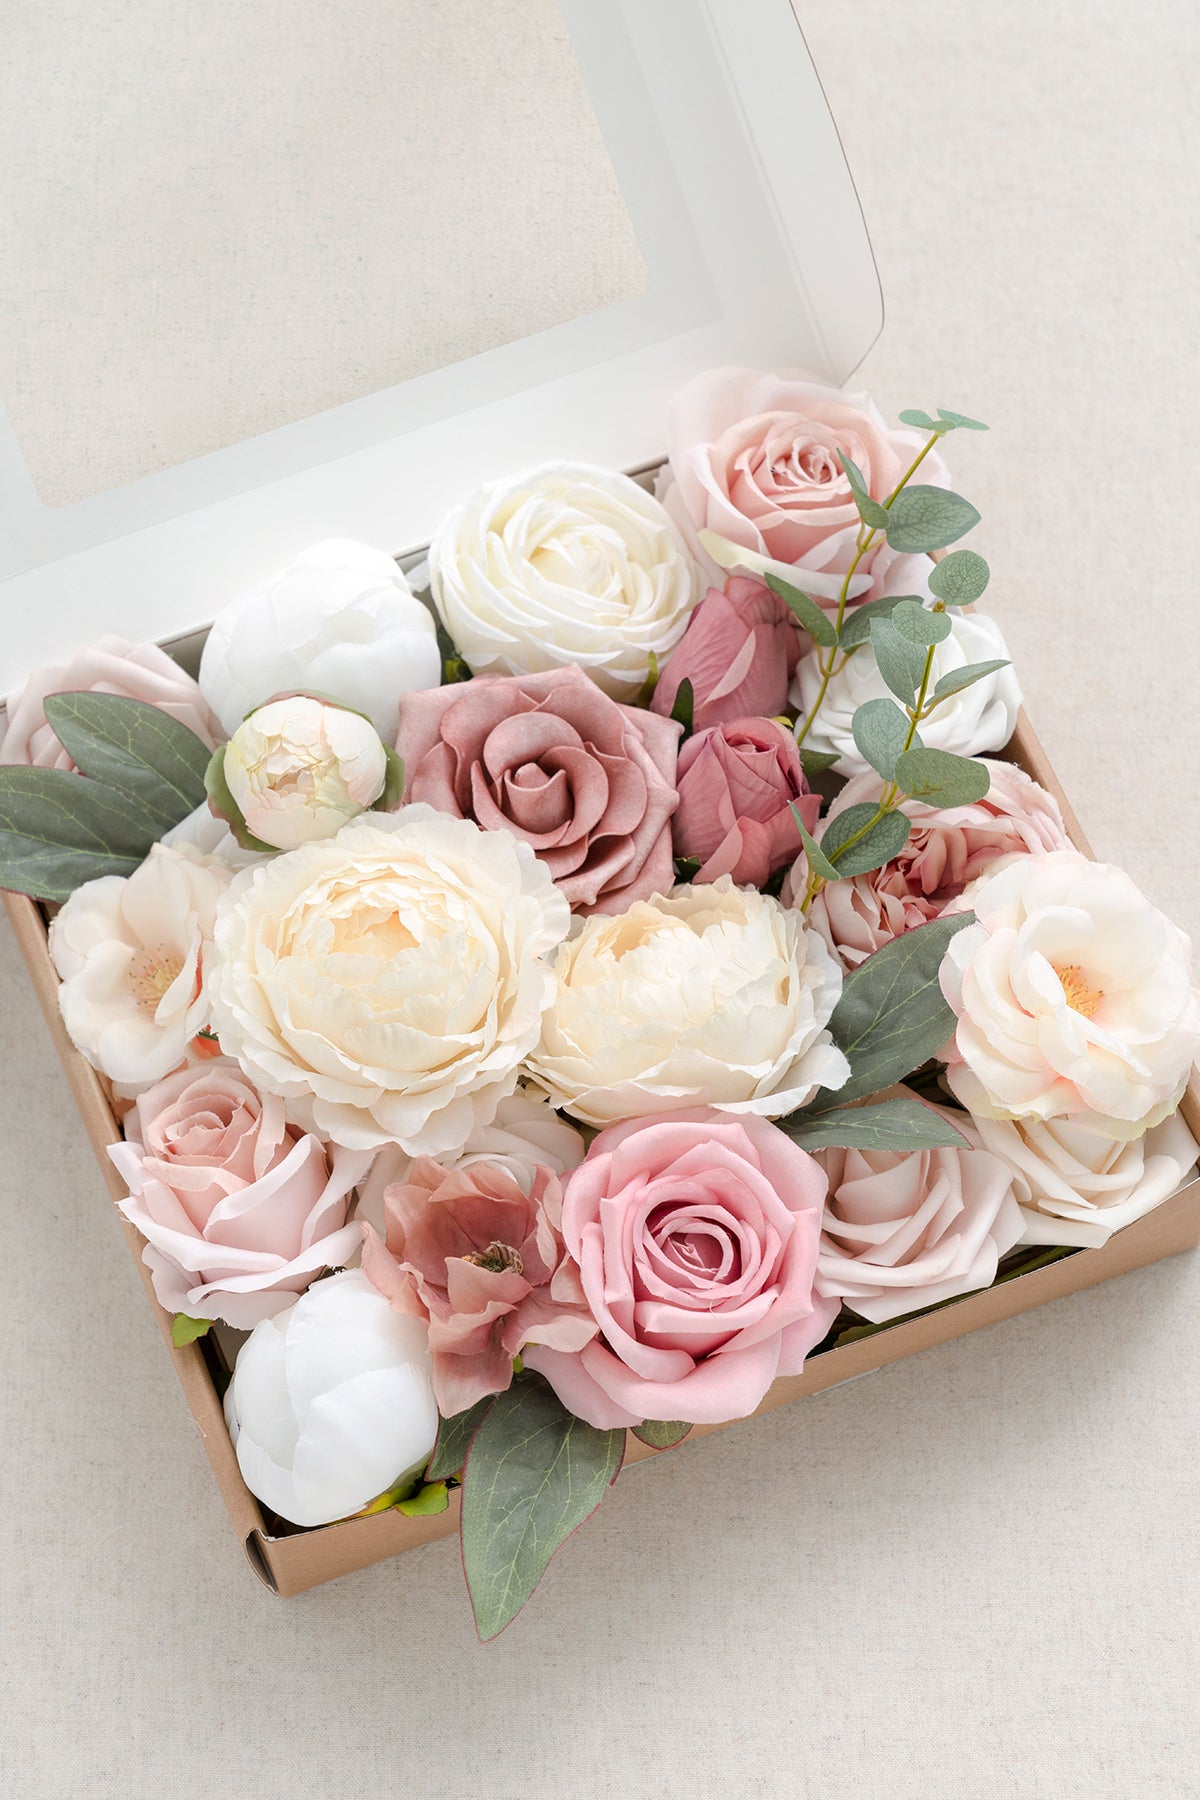 DIY Designer Flower Boxes in Dusty Rose & Cream